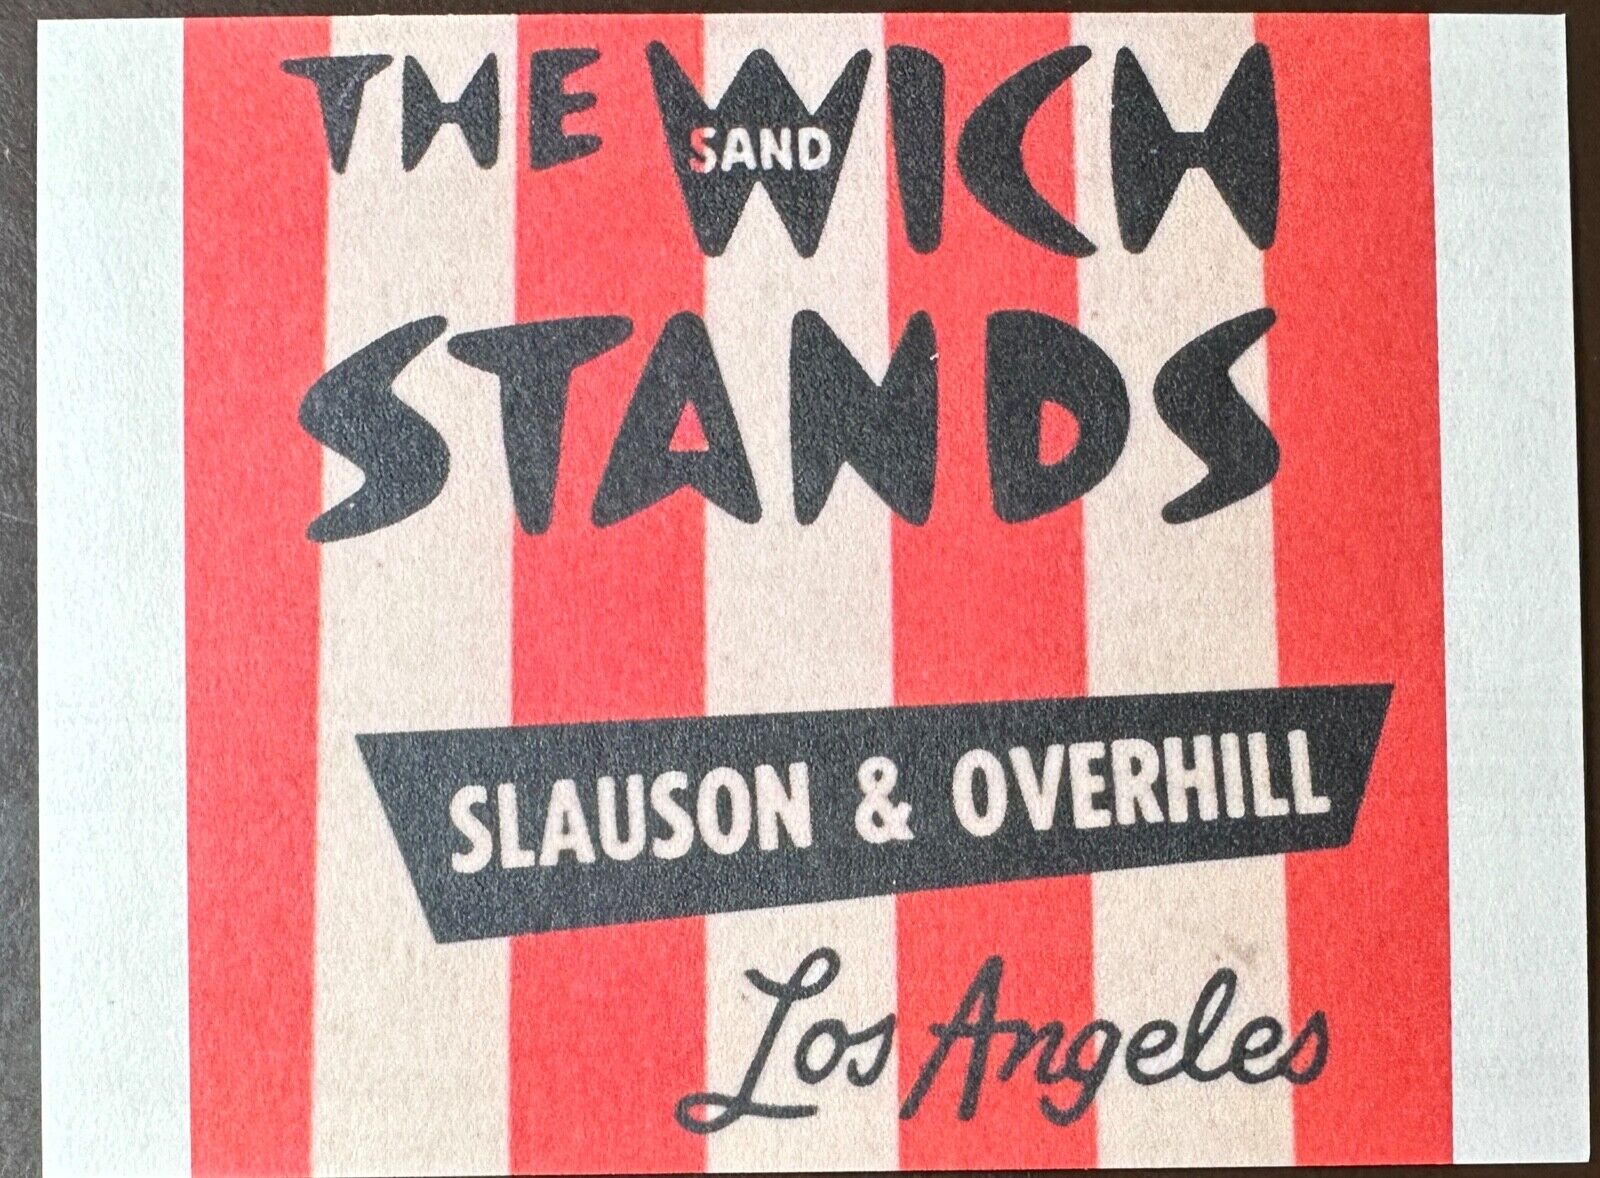 The Wich Stands -Slauson & Overhill - Los Angeles, Ca. postcard- See Description